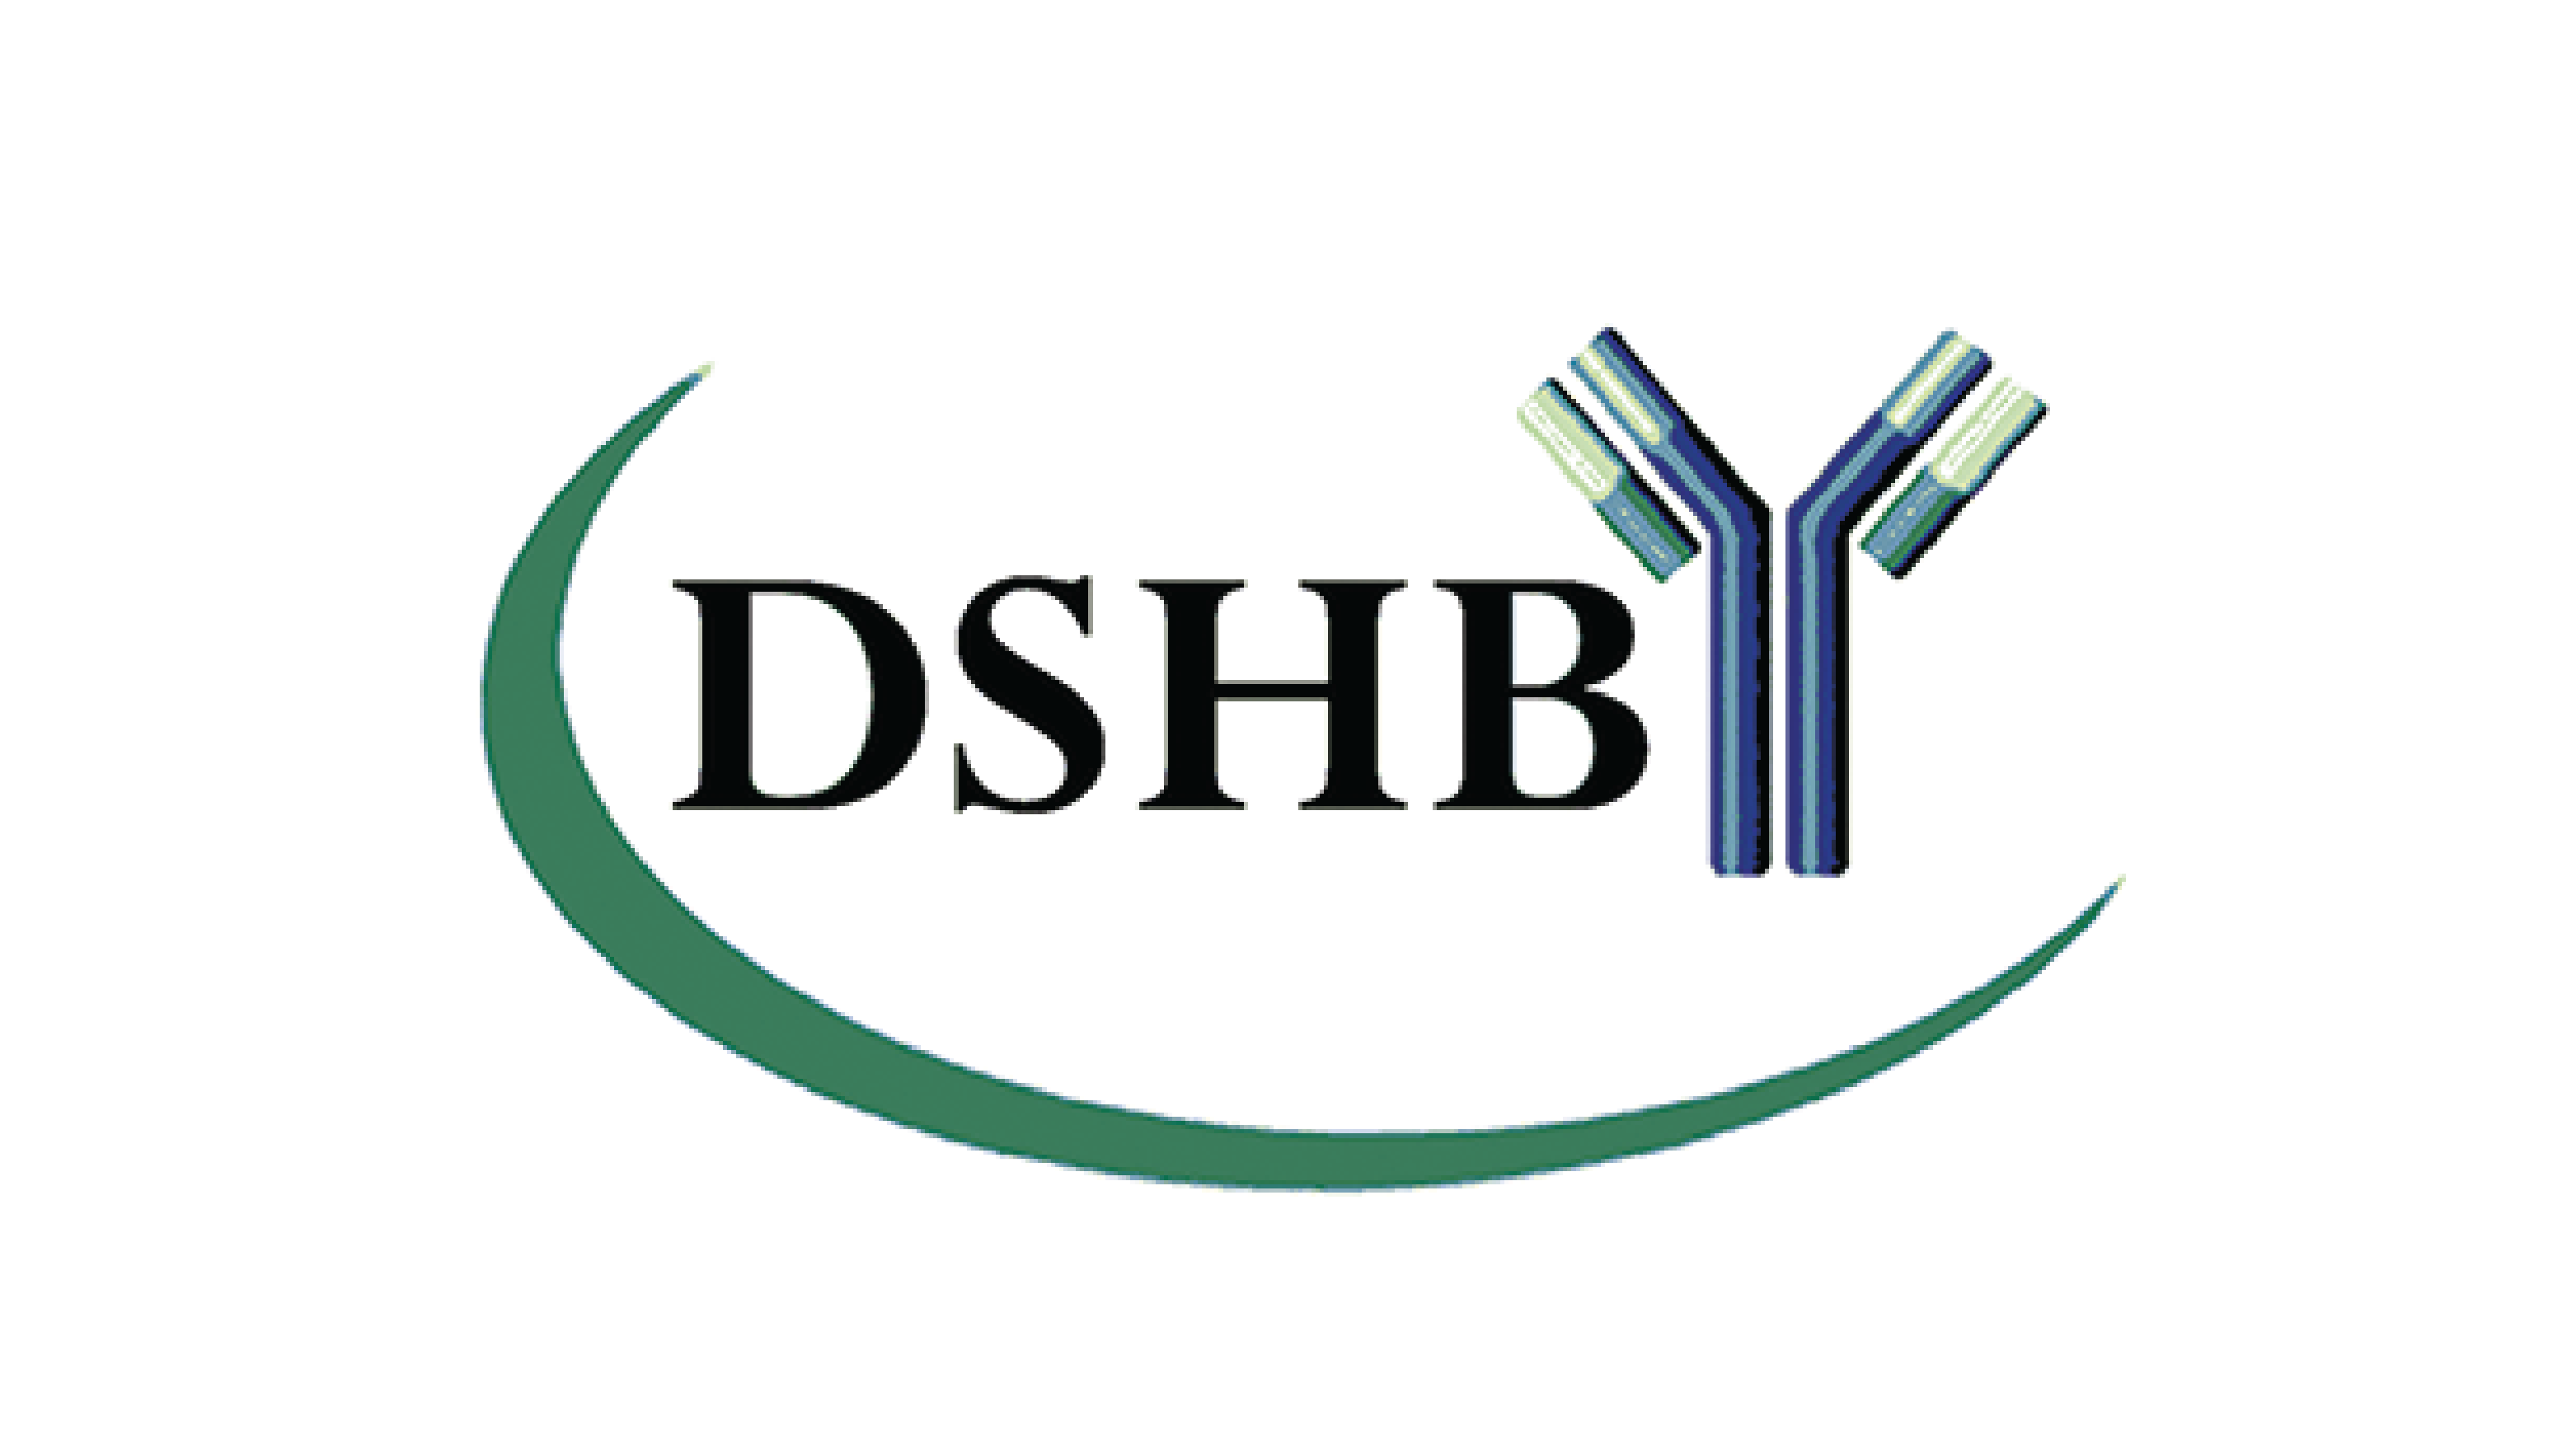 DSHB is a TPDA sponsor of Neuroscience 2021.